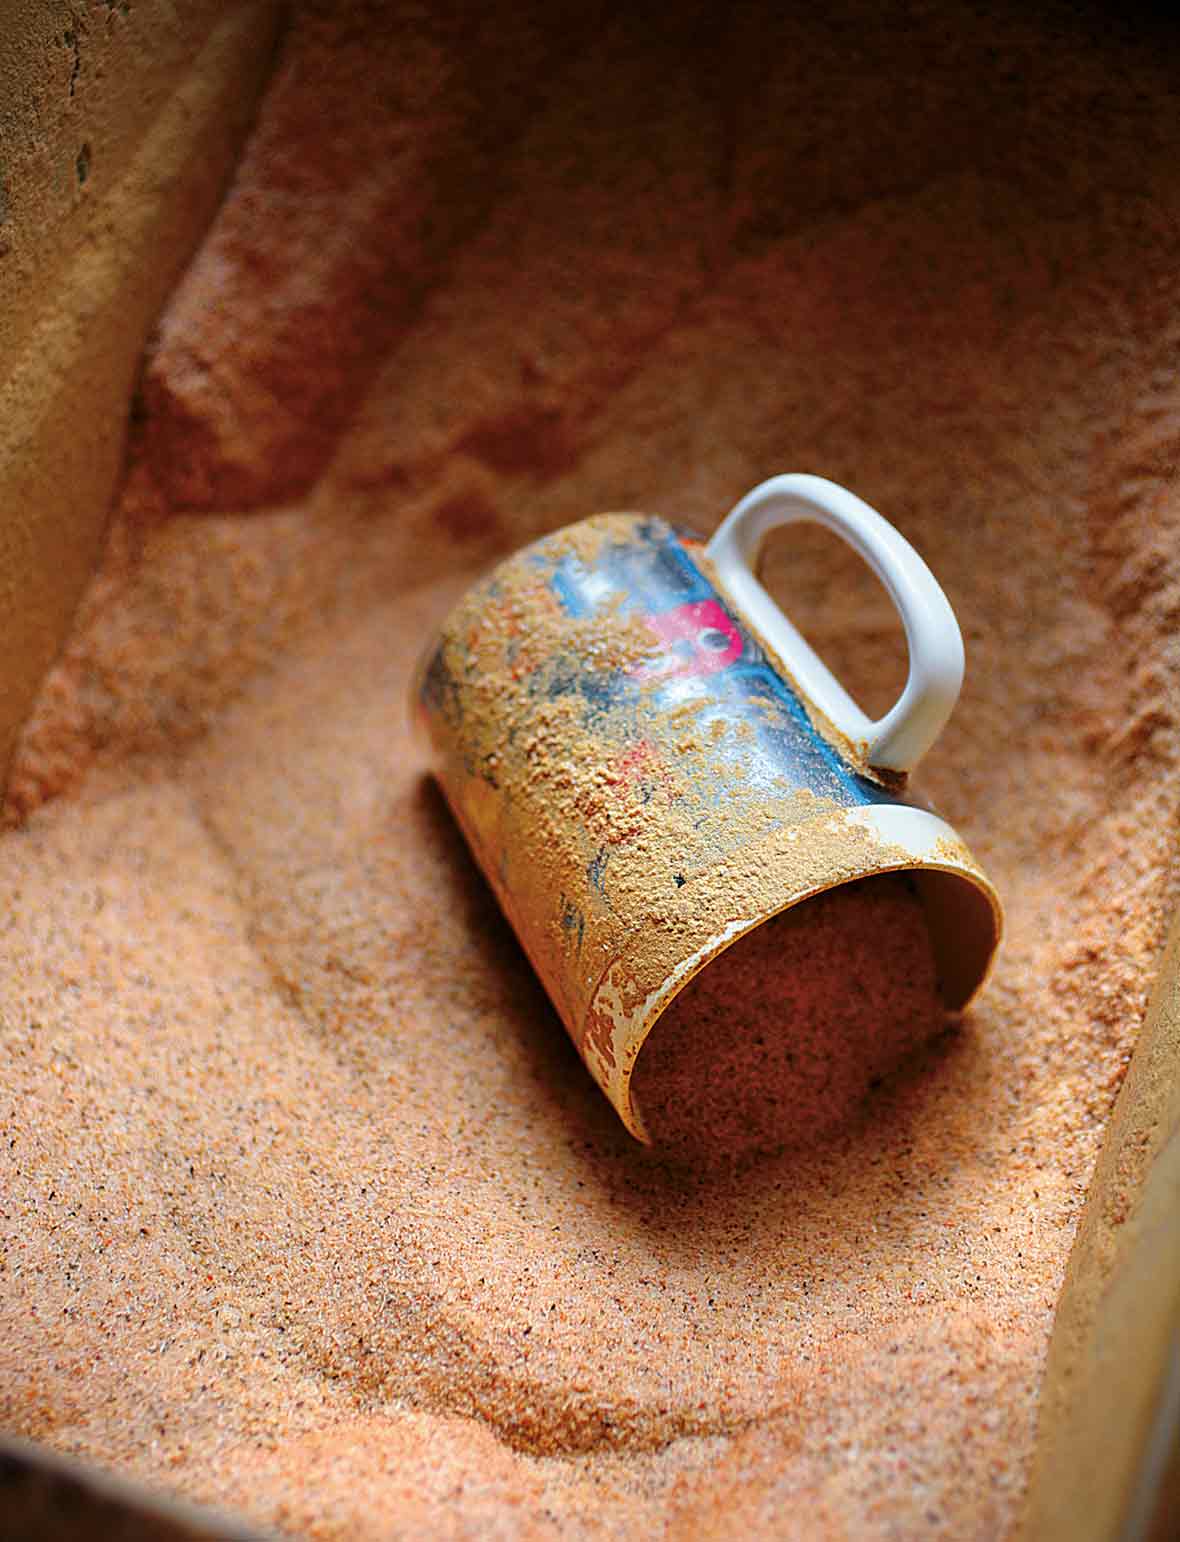 A mug lying on its side in a bin of cajun spice mix